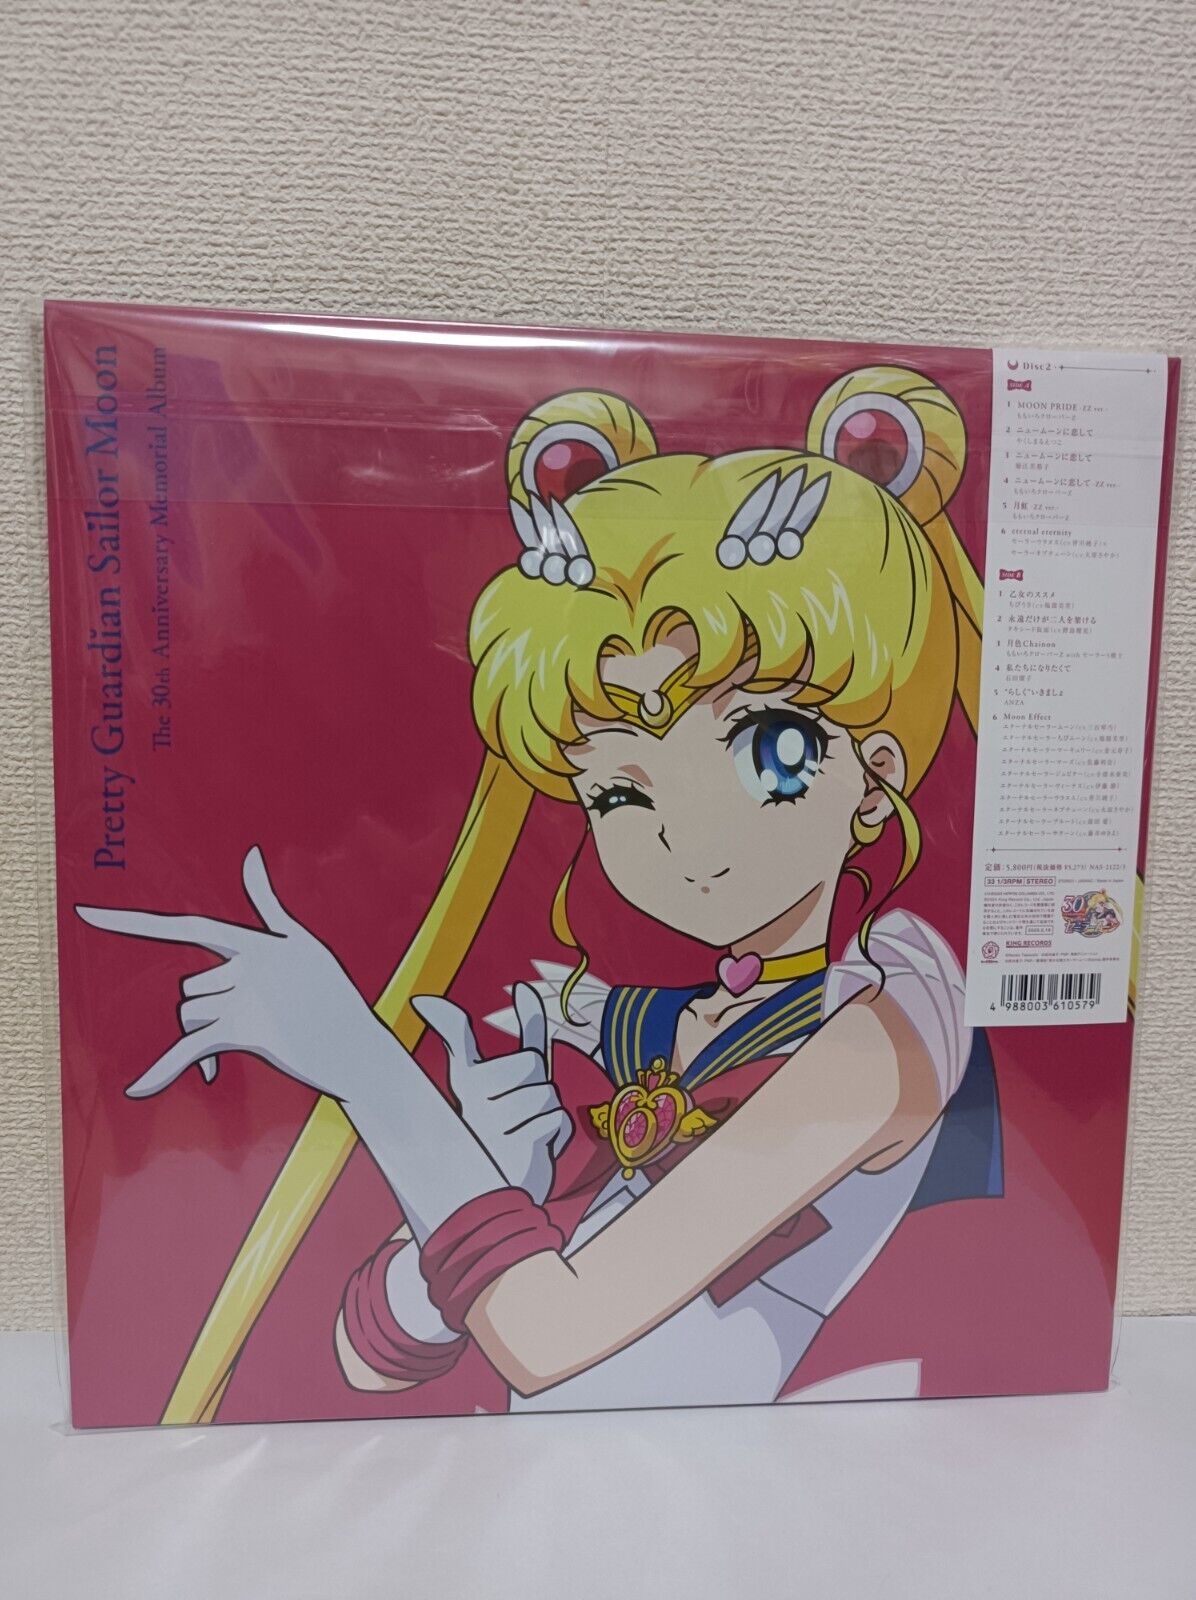 Sailor moon 30th Anniversary Memorial Album vinyl LP record